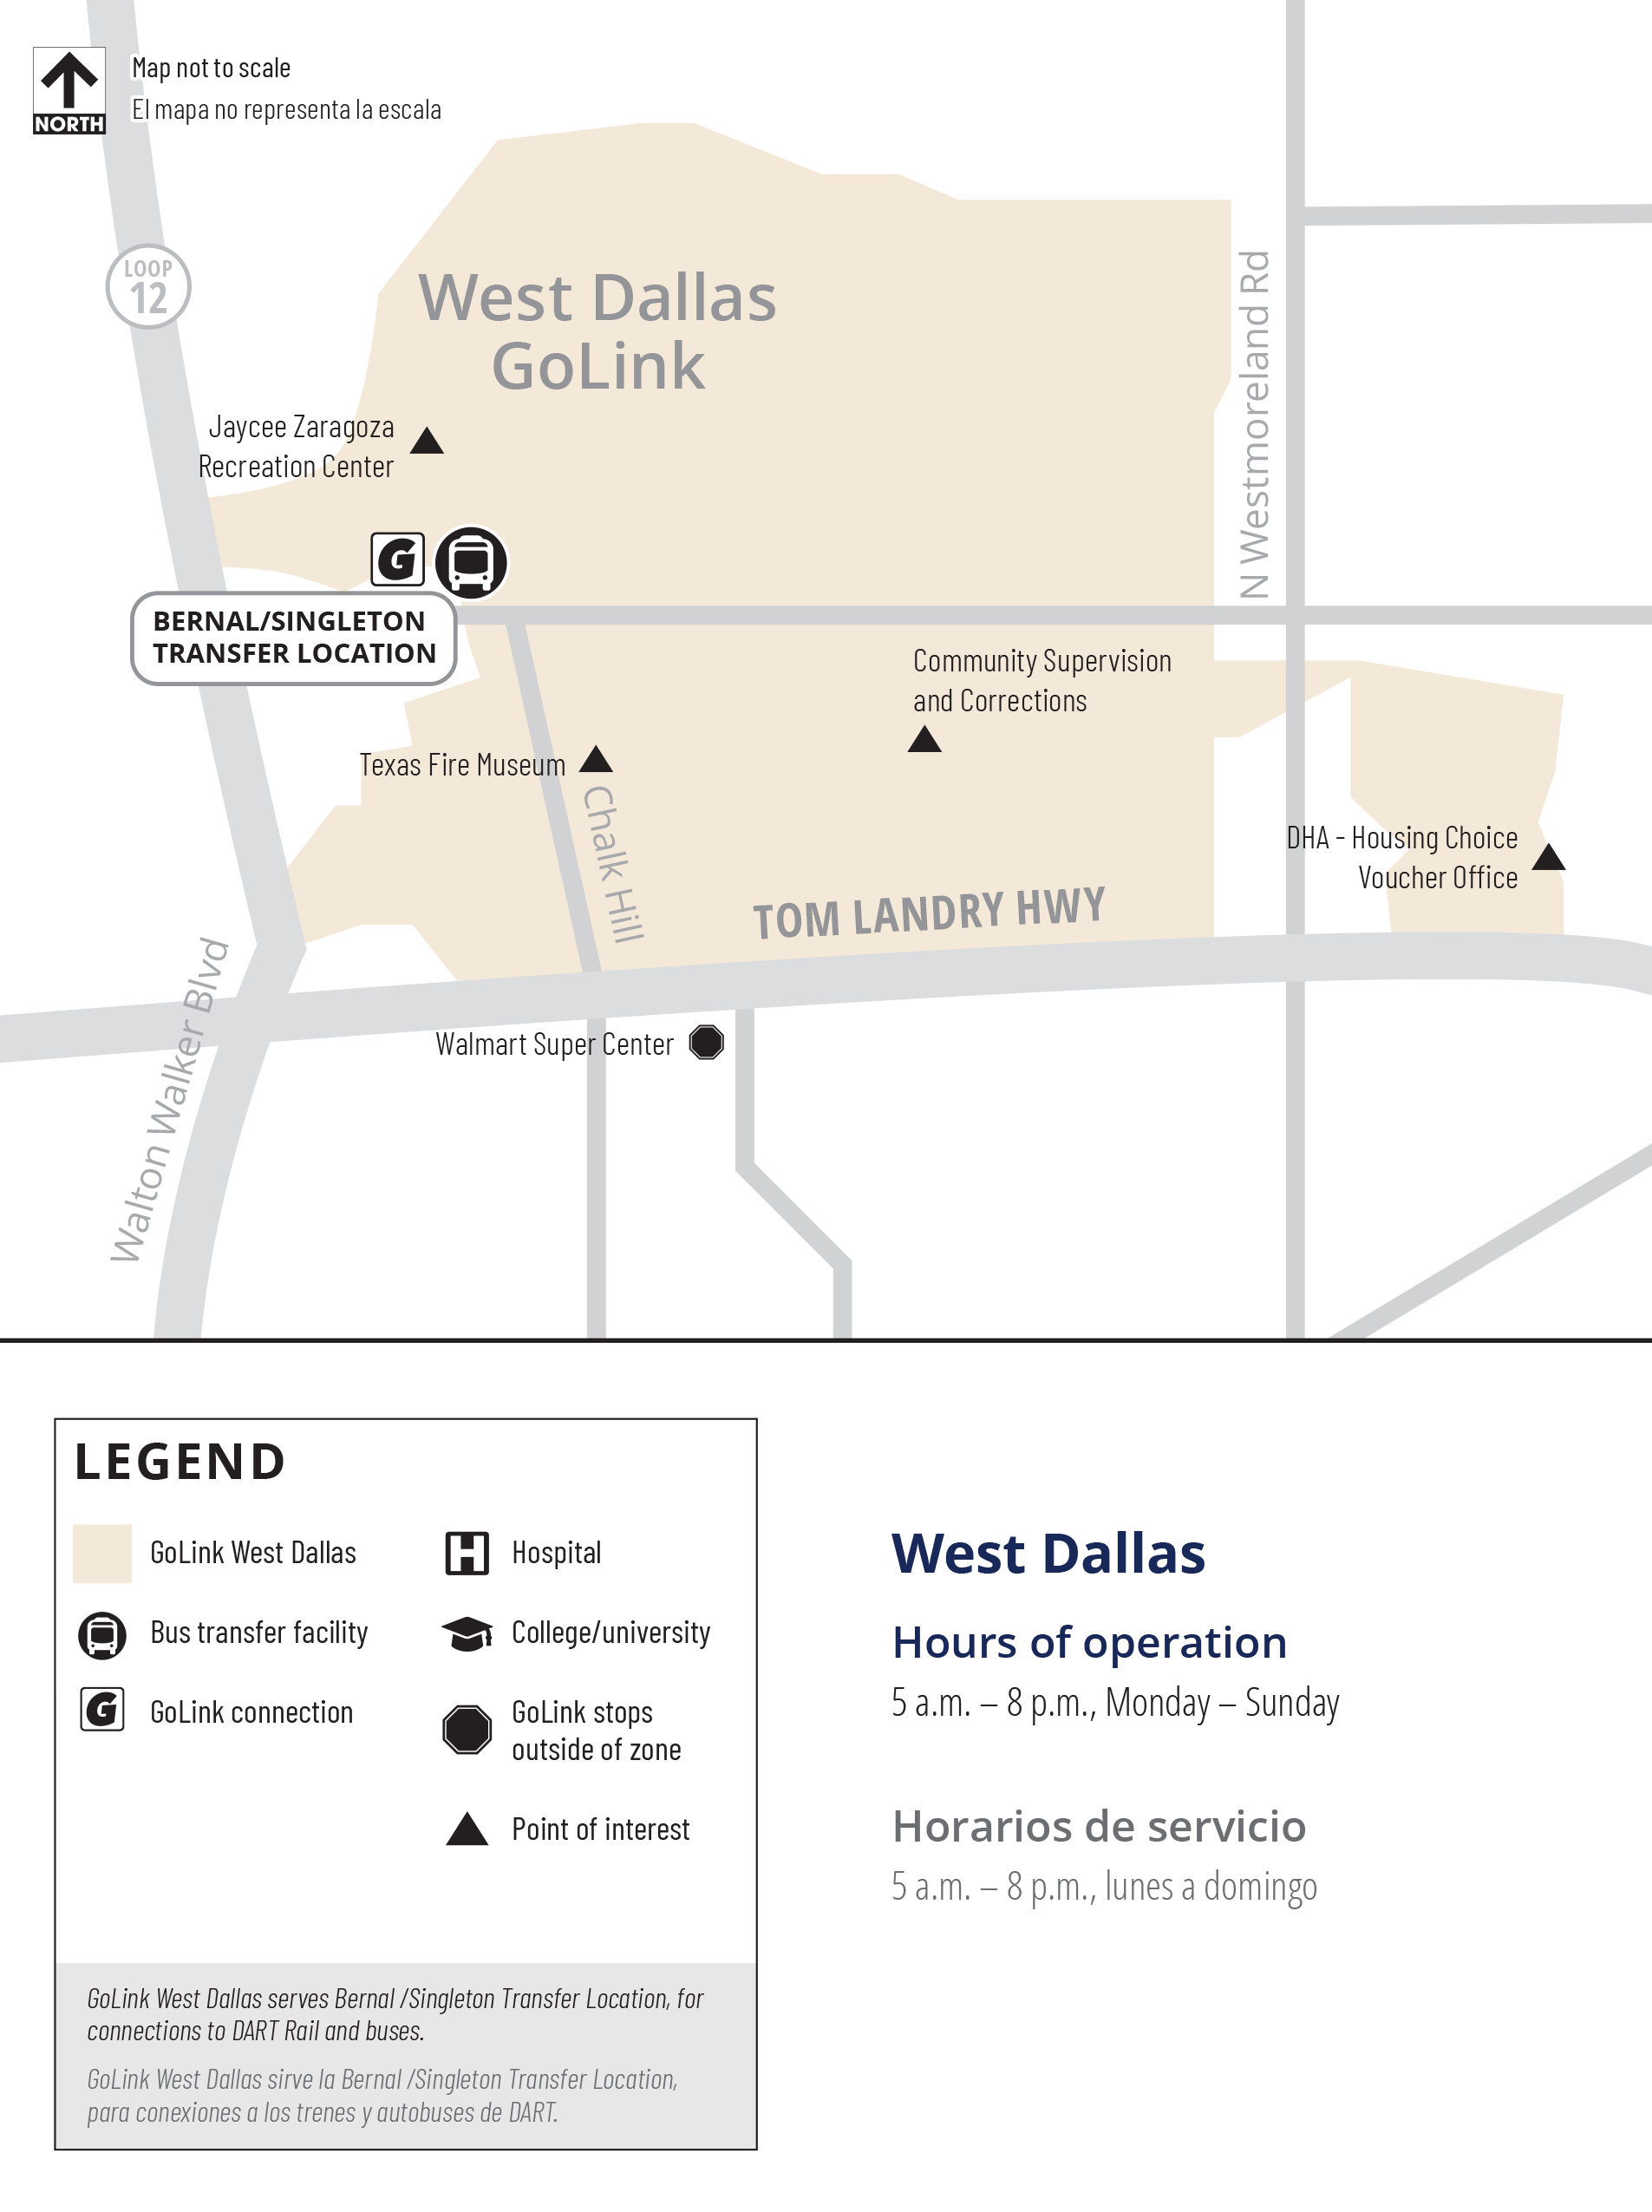 GoLink West Dallas